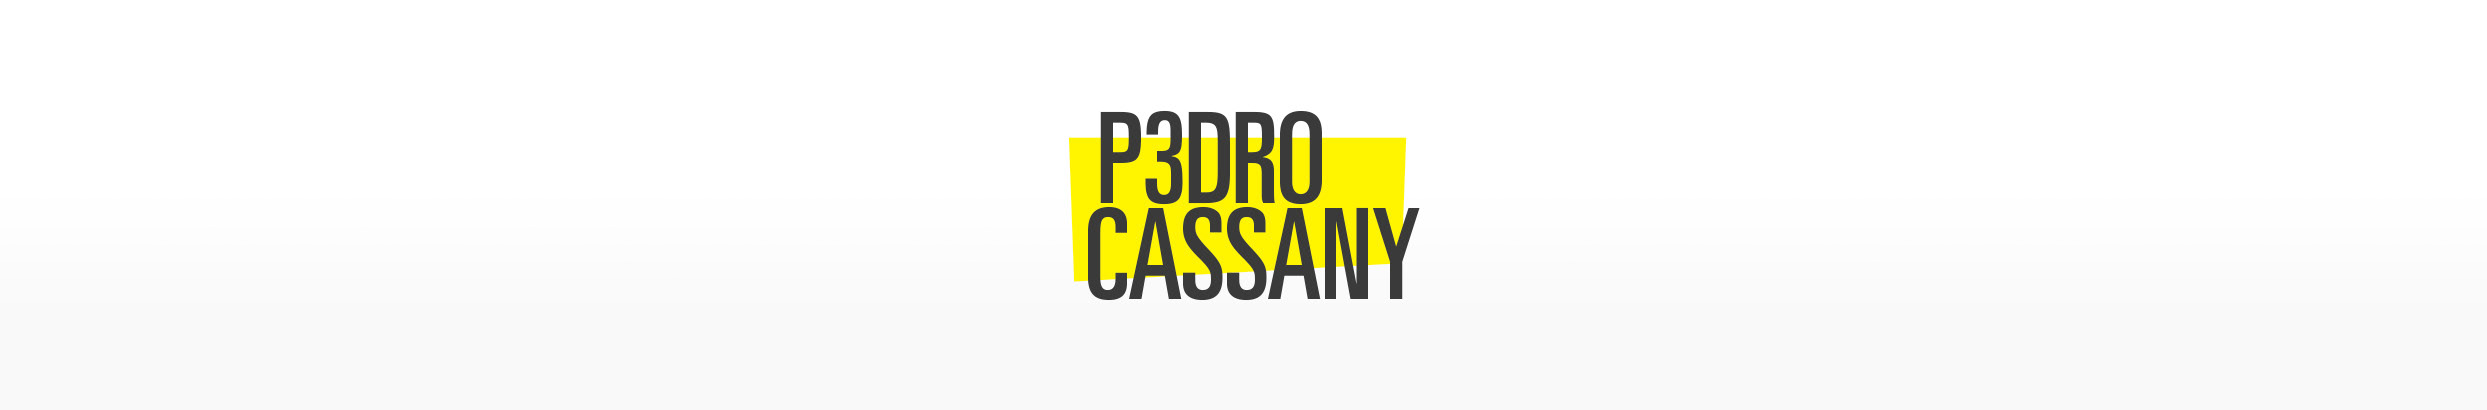 Pedro Cassany 的个人资料横幅